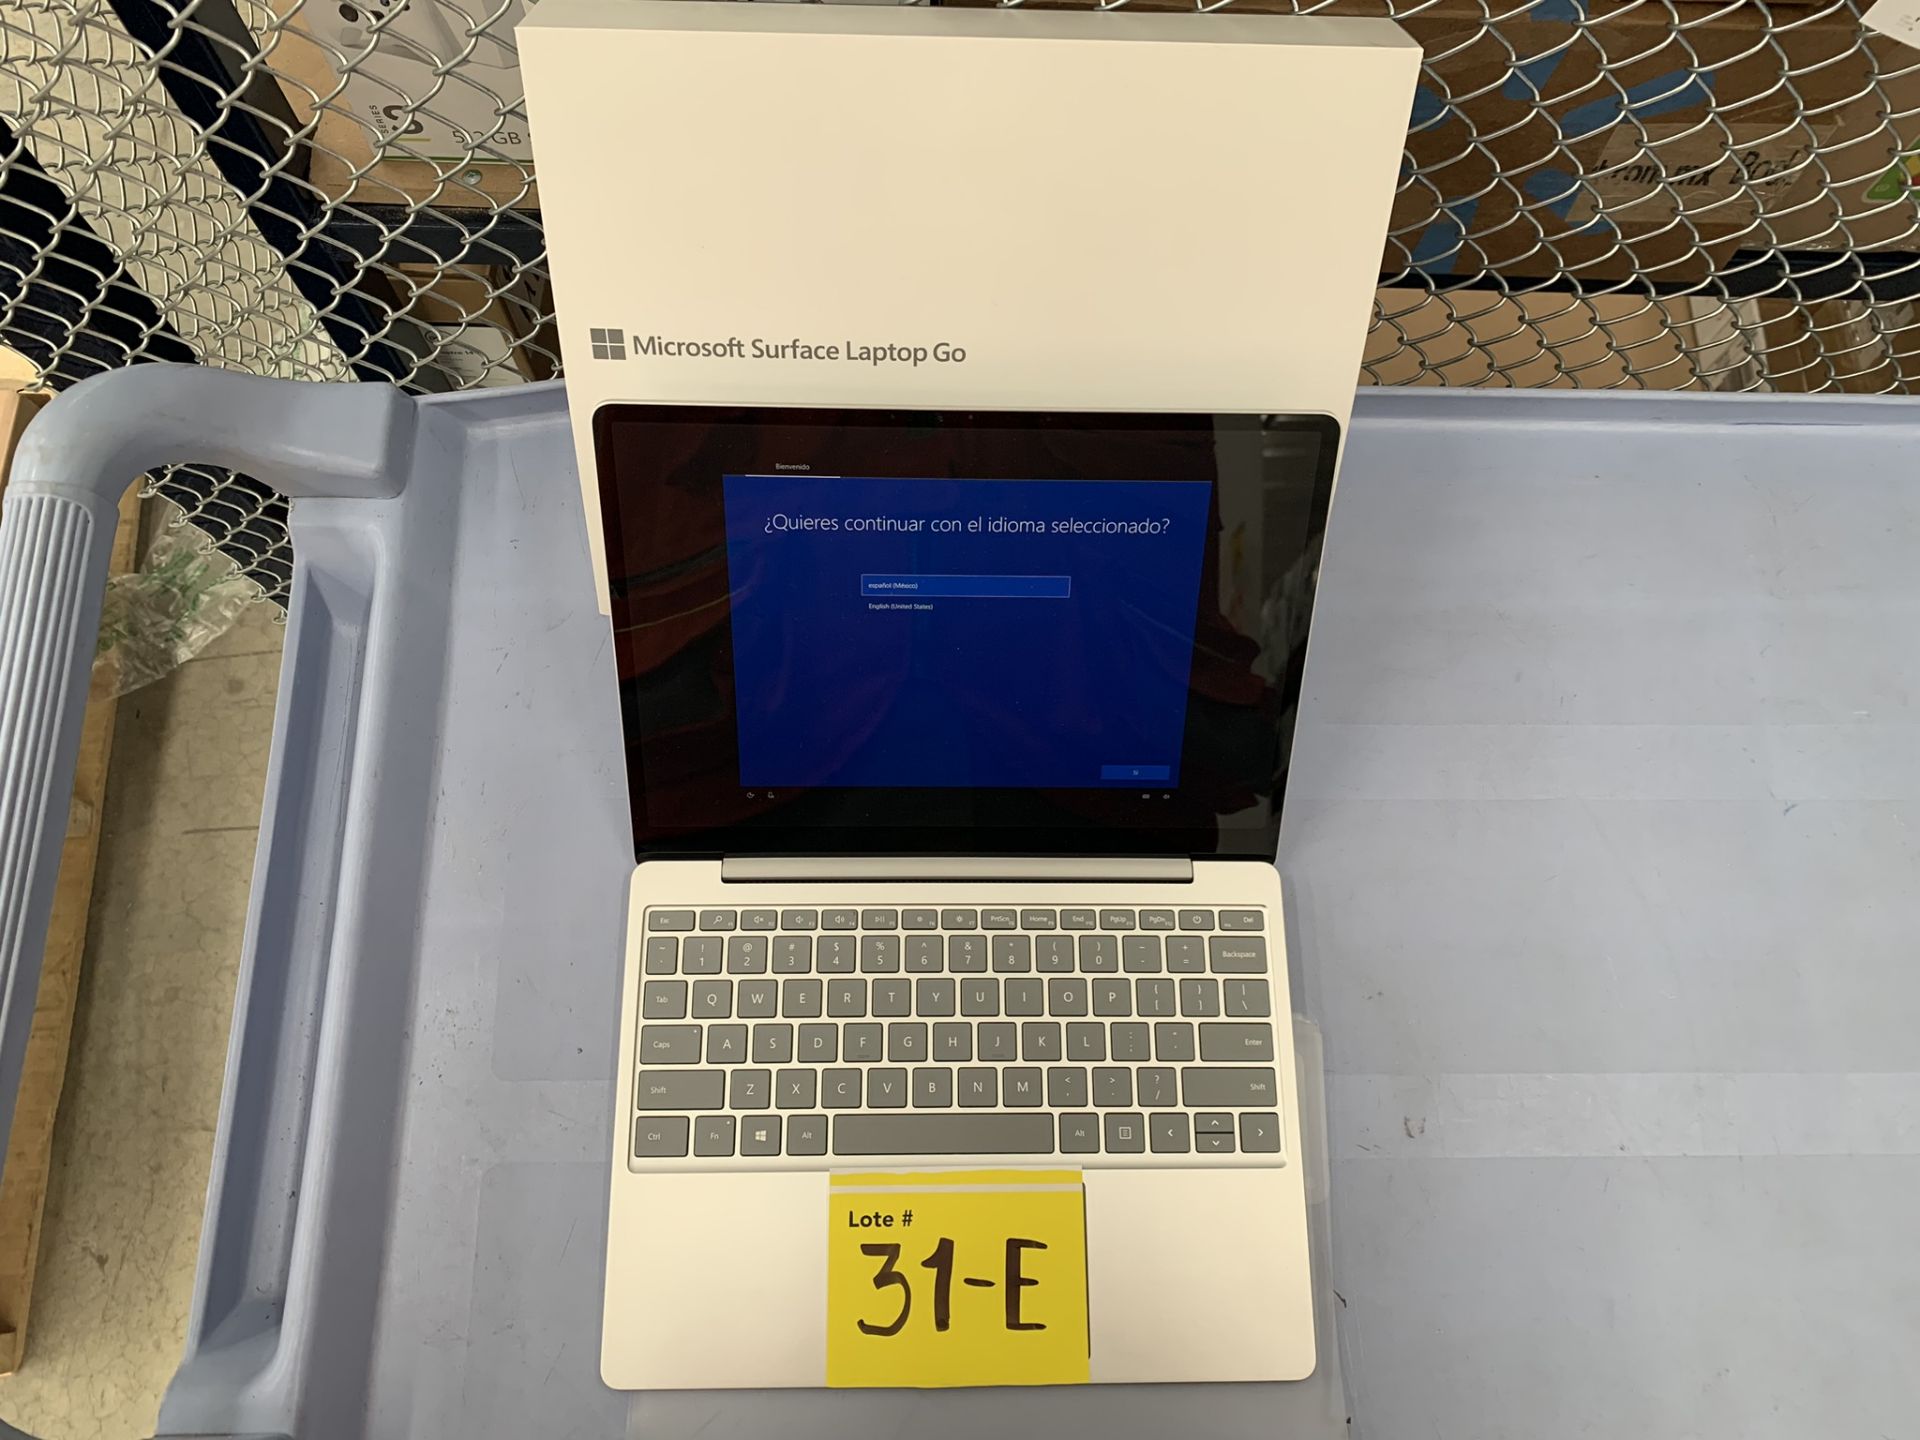 Lote De 2 Laptops Contiene: 1 Laptop MS Surface GO Marca Microsoft Modelo 1943, Serie 012012104